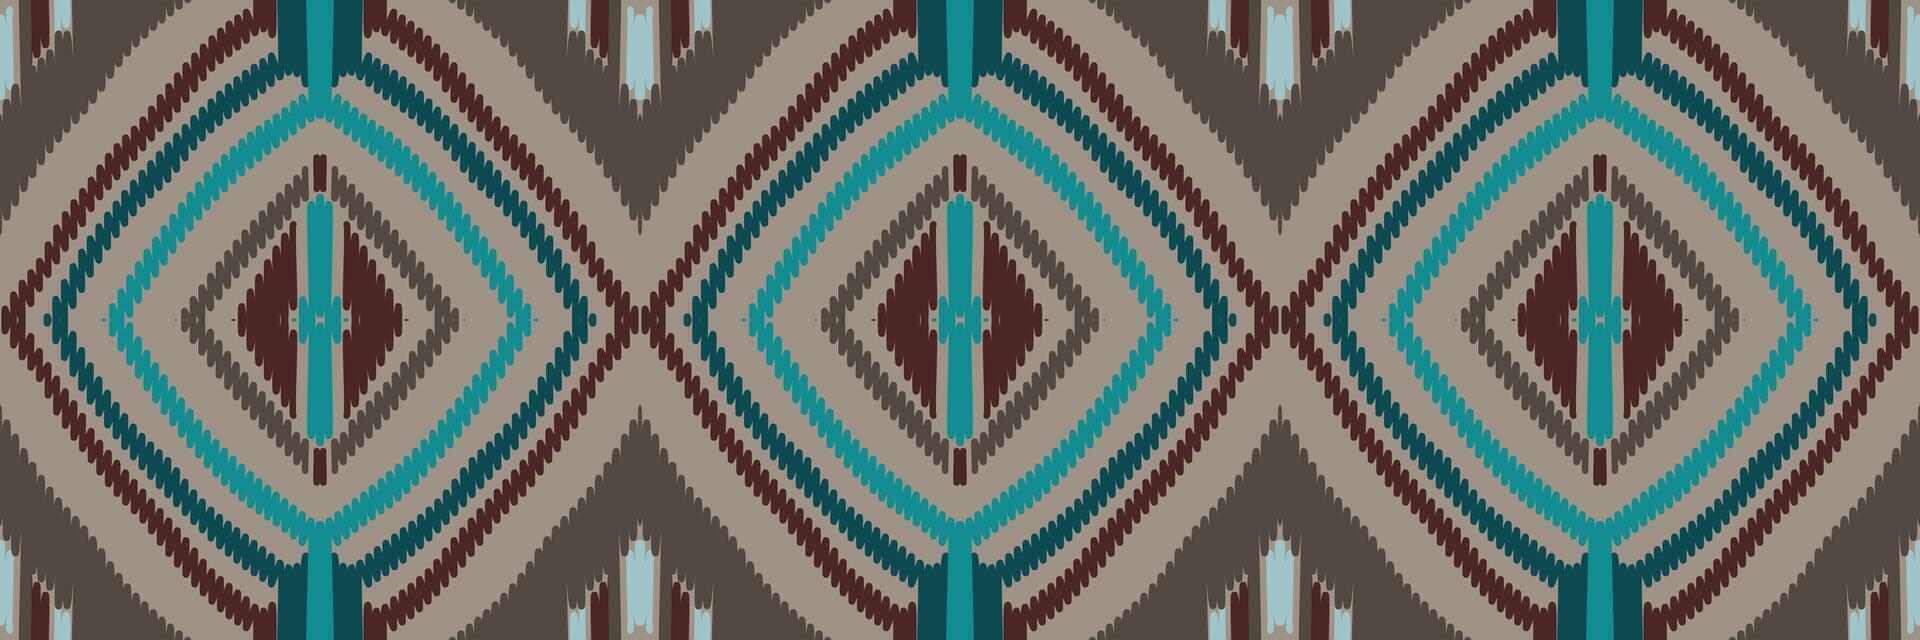 Ikat abstract geometric embroidery ethnic pattern design. Aztec fabric carpet mandala ornament chevron textile decoration wallpaper. Tribal boho native ethnic turkey traditional vector background